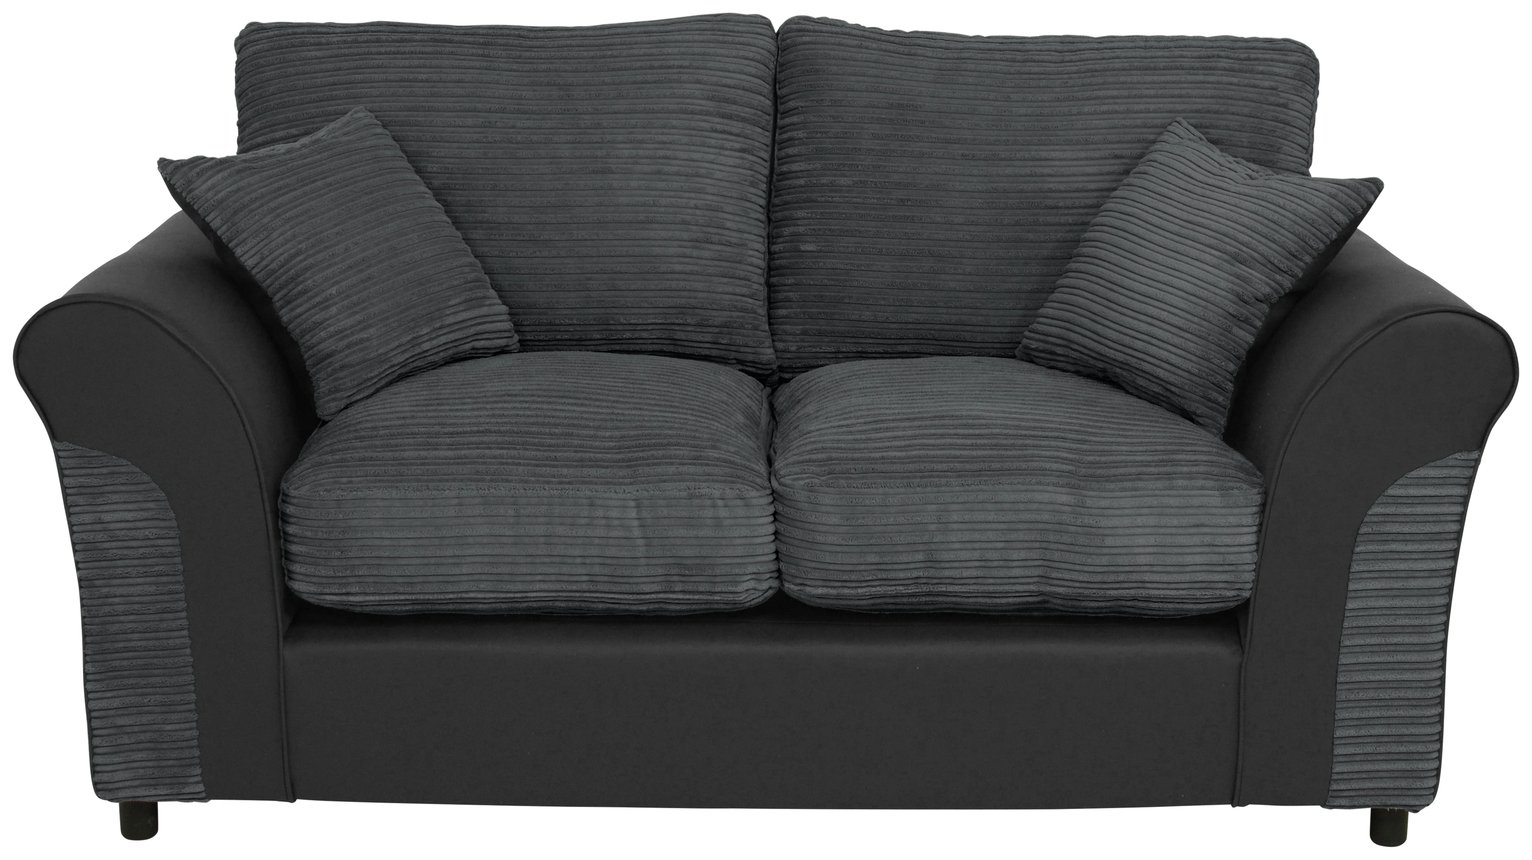 Argos Home Harry 2 Seater Fabric Sofa review